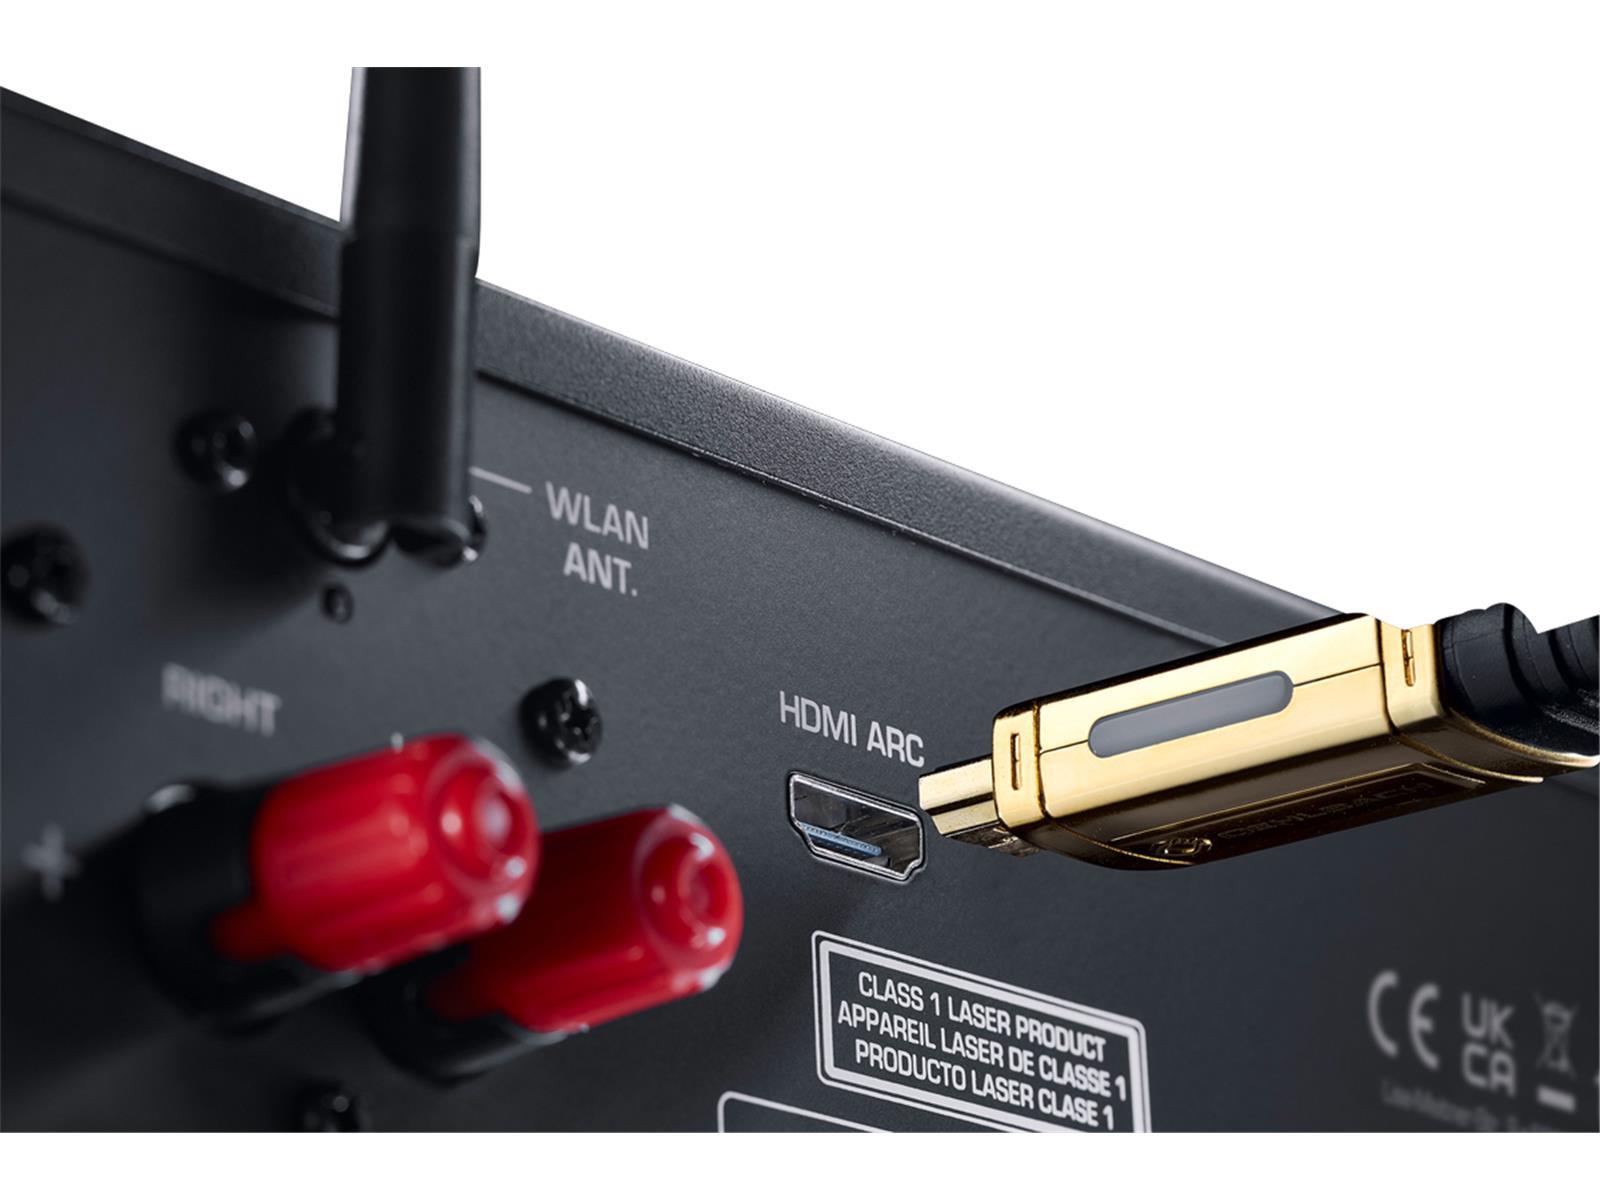 Magnat MC 400 Stereo Netzwerk-Receiver